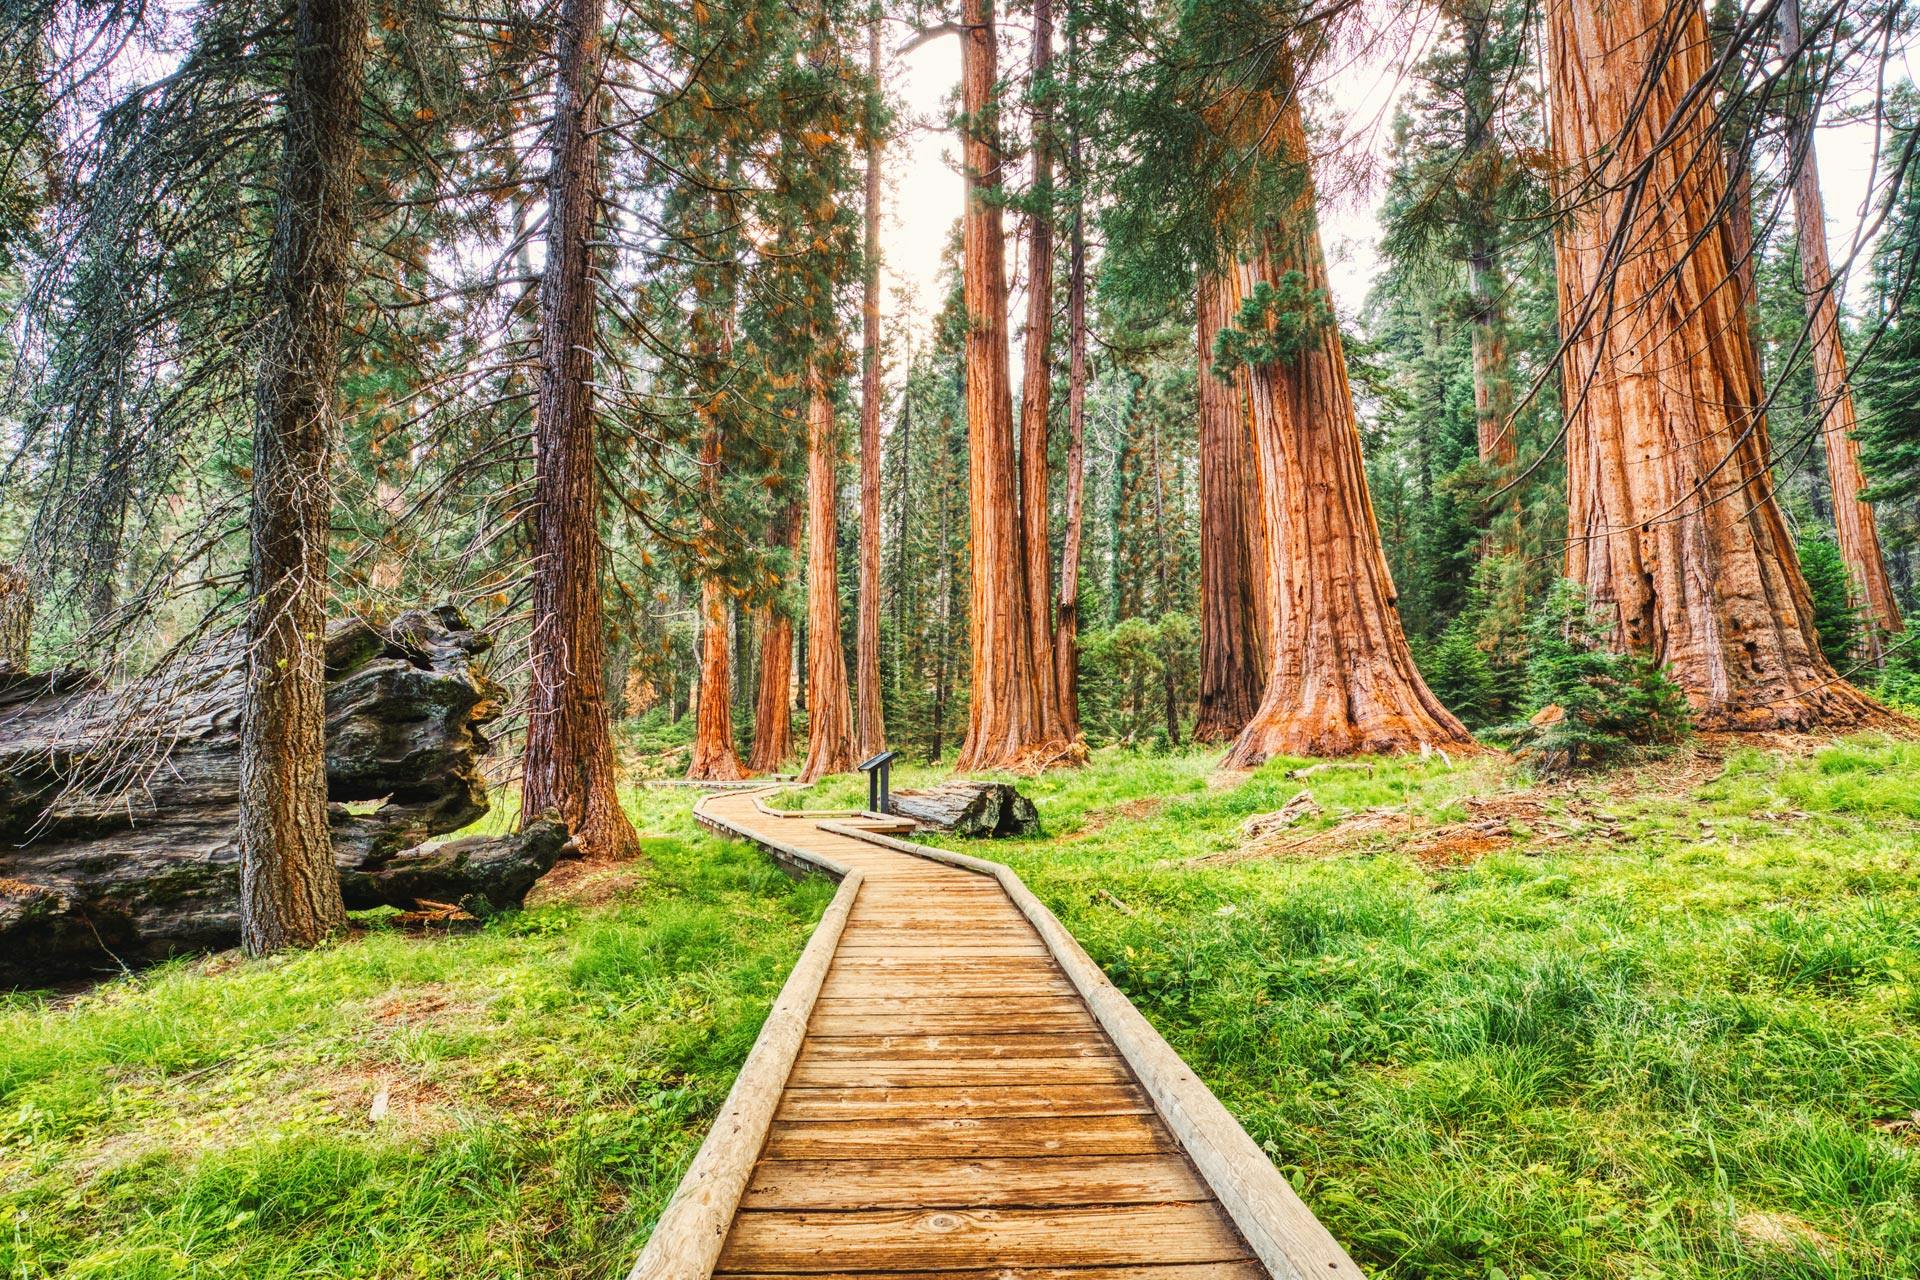 Avenue of Giant Redwoods